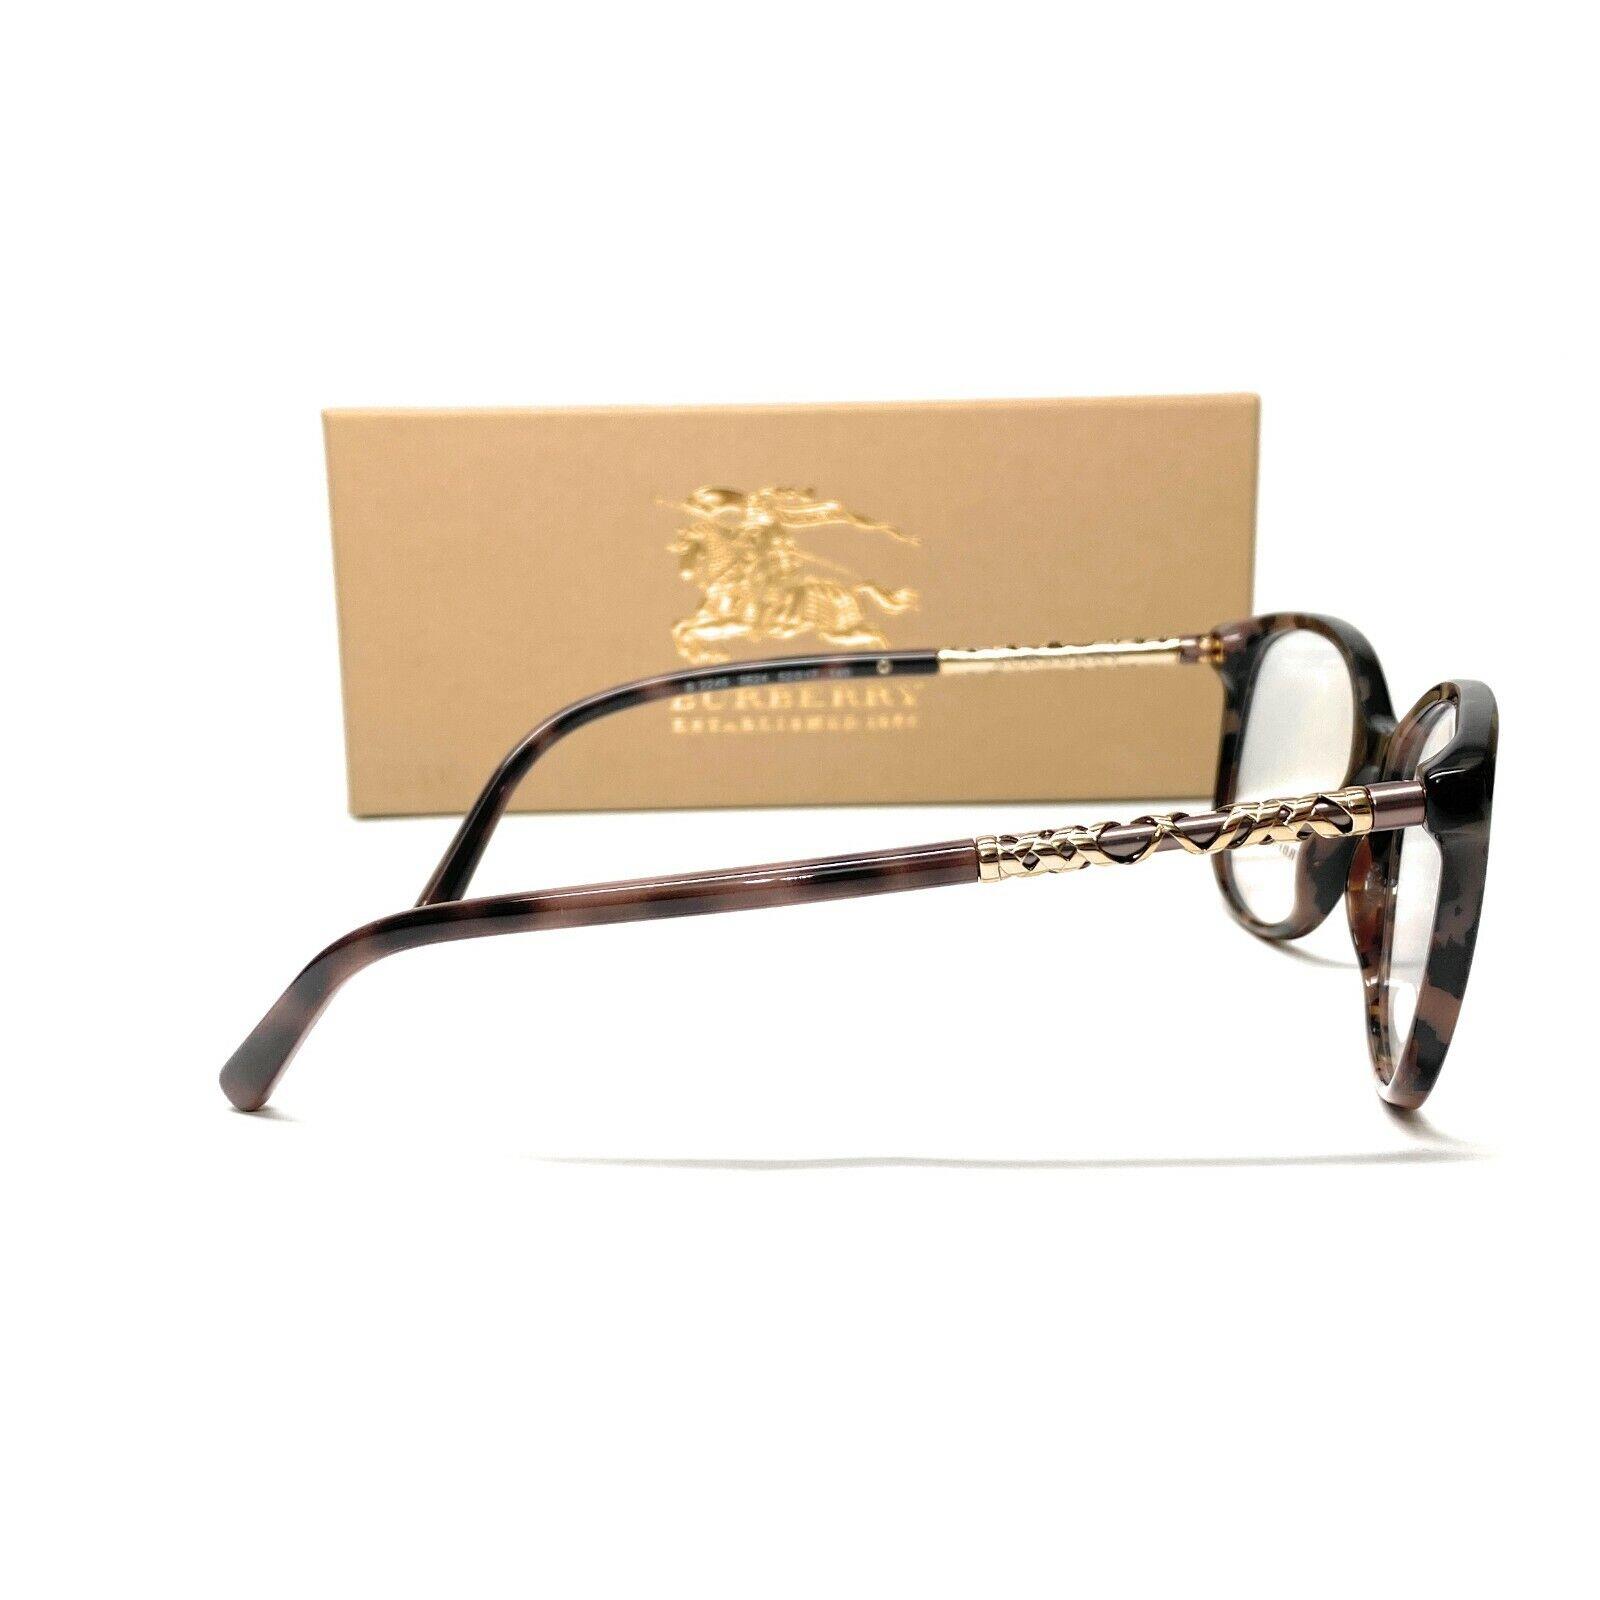 Burberry eyeglasses  - Spotted Brown Frame